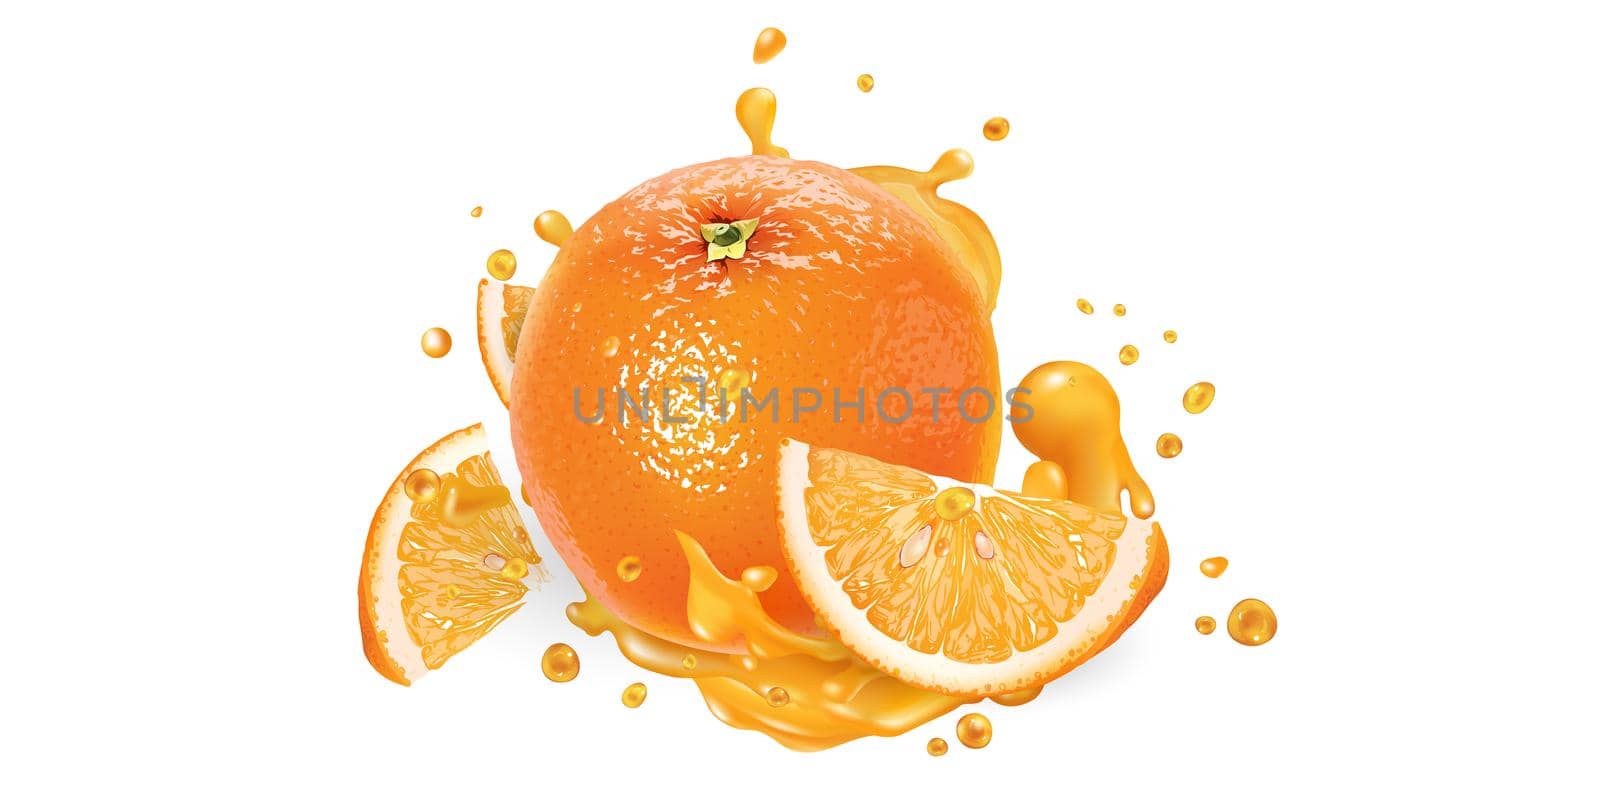 Orange whole and slices in fruit juice splashes on a white background. Realistic style illustration.